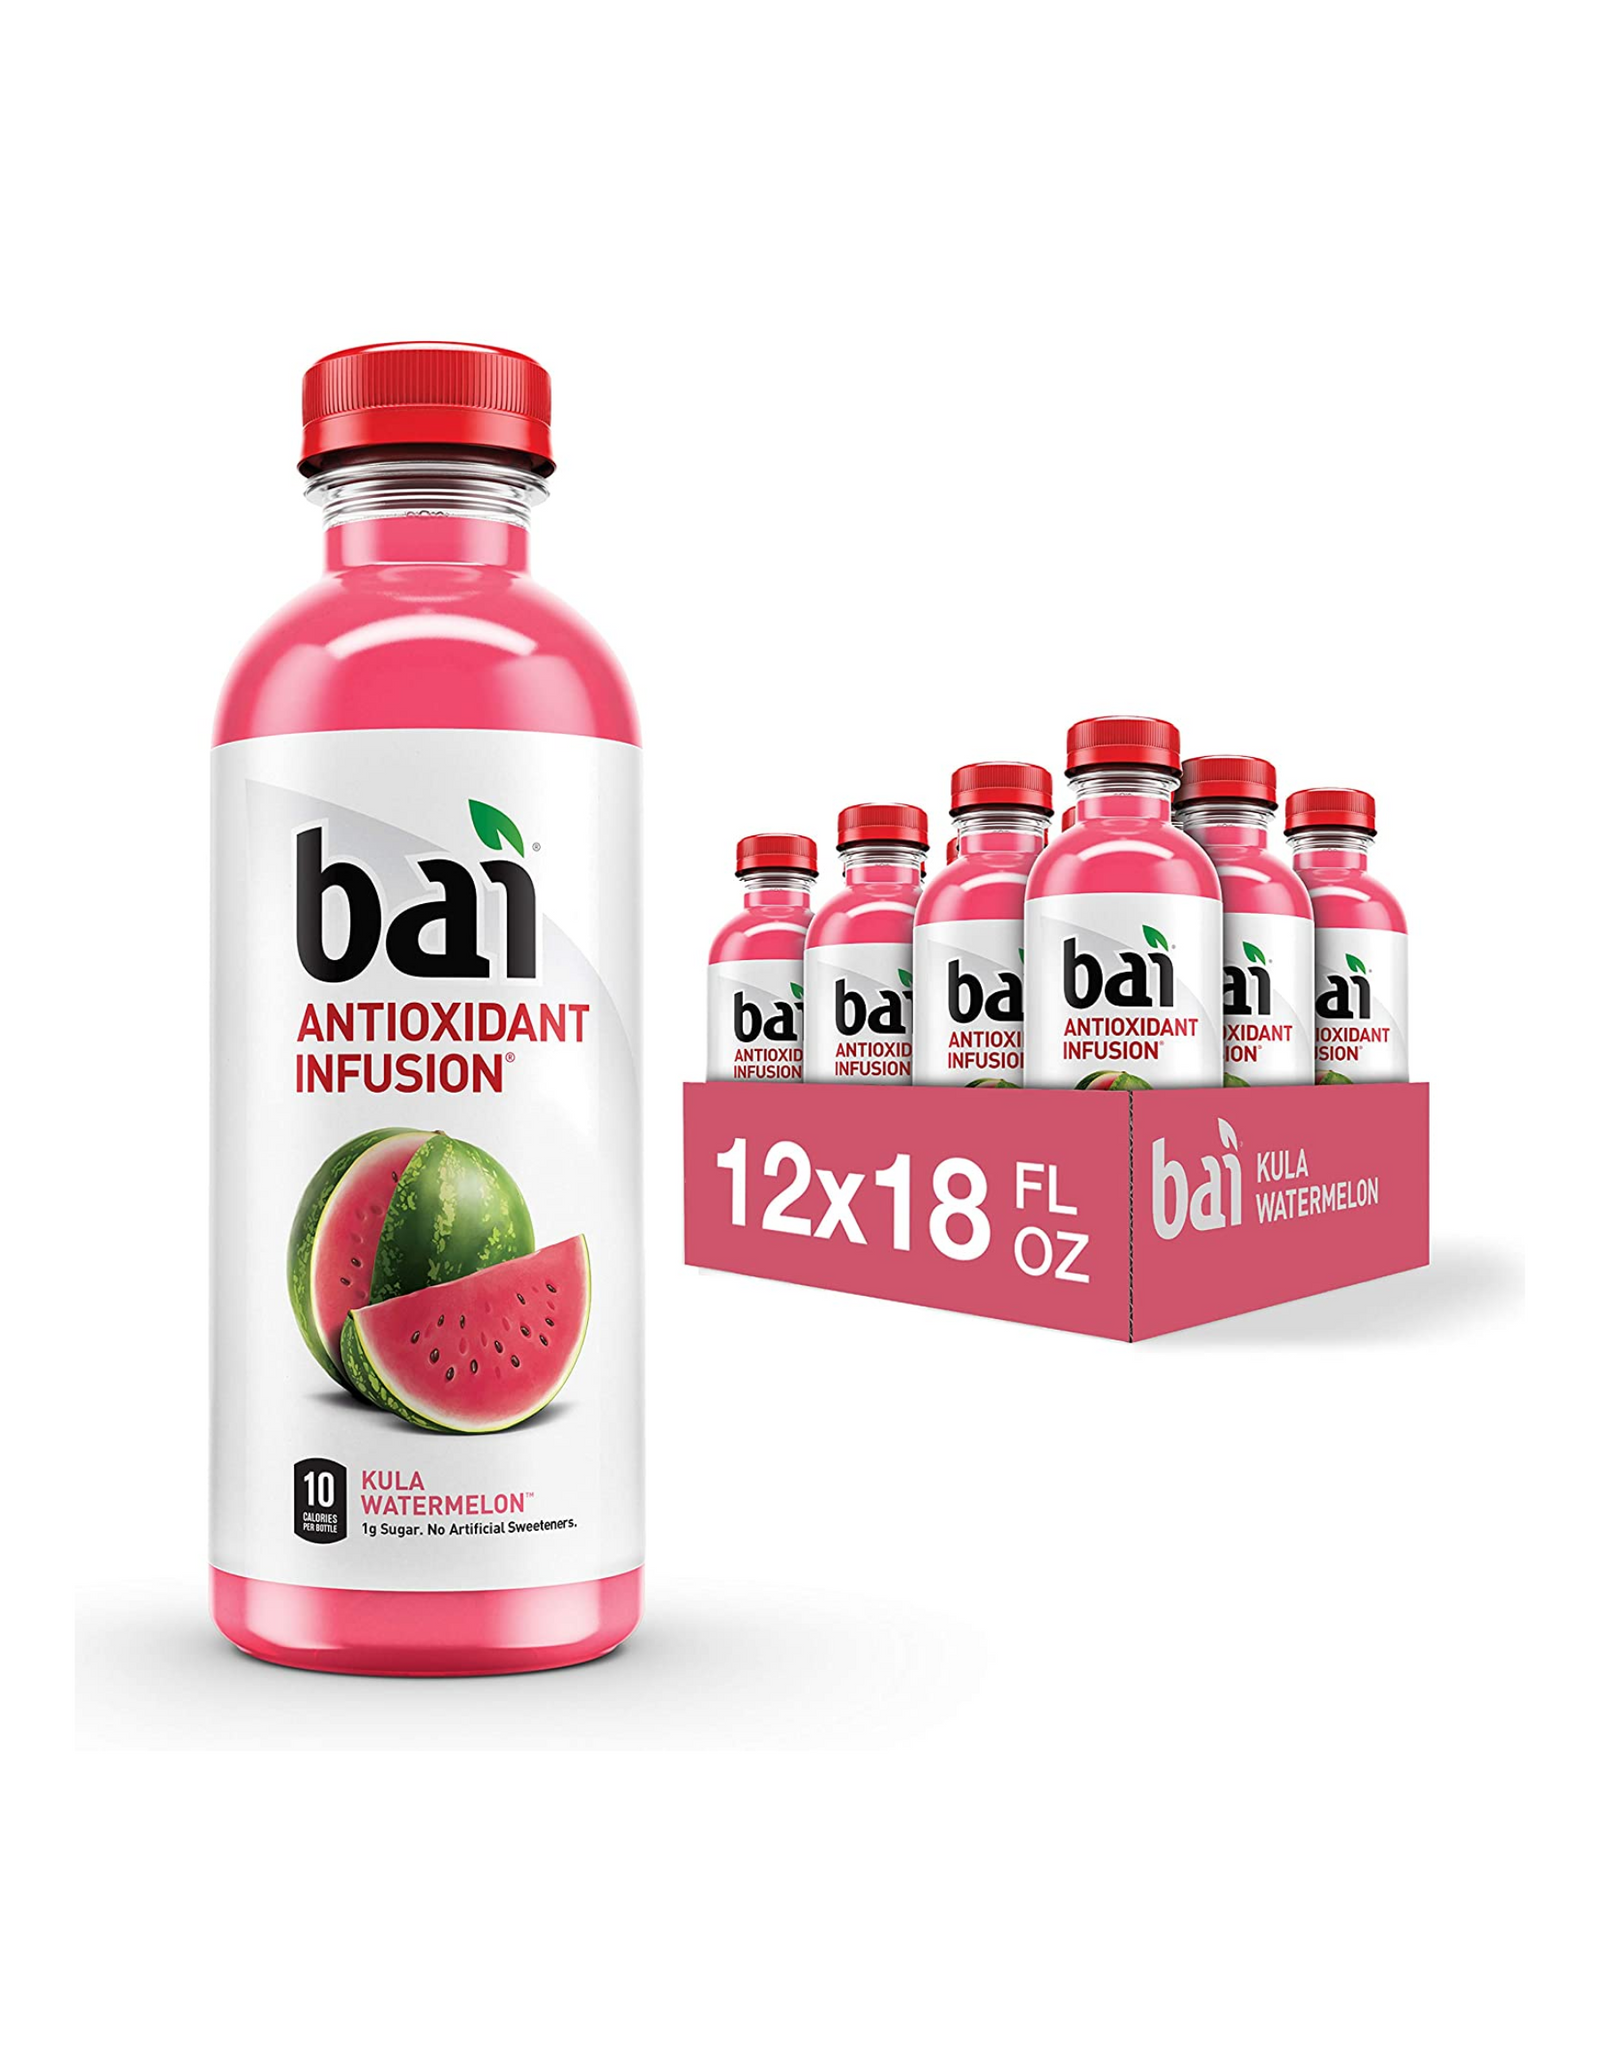 Bai Flavored Water, Antioxidant Infused Drinks, Kula Watermelon, 18 fl oz (Pack of 12)